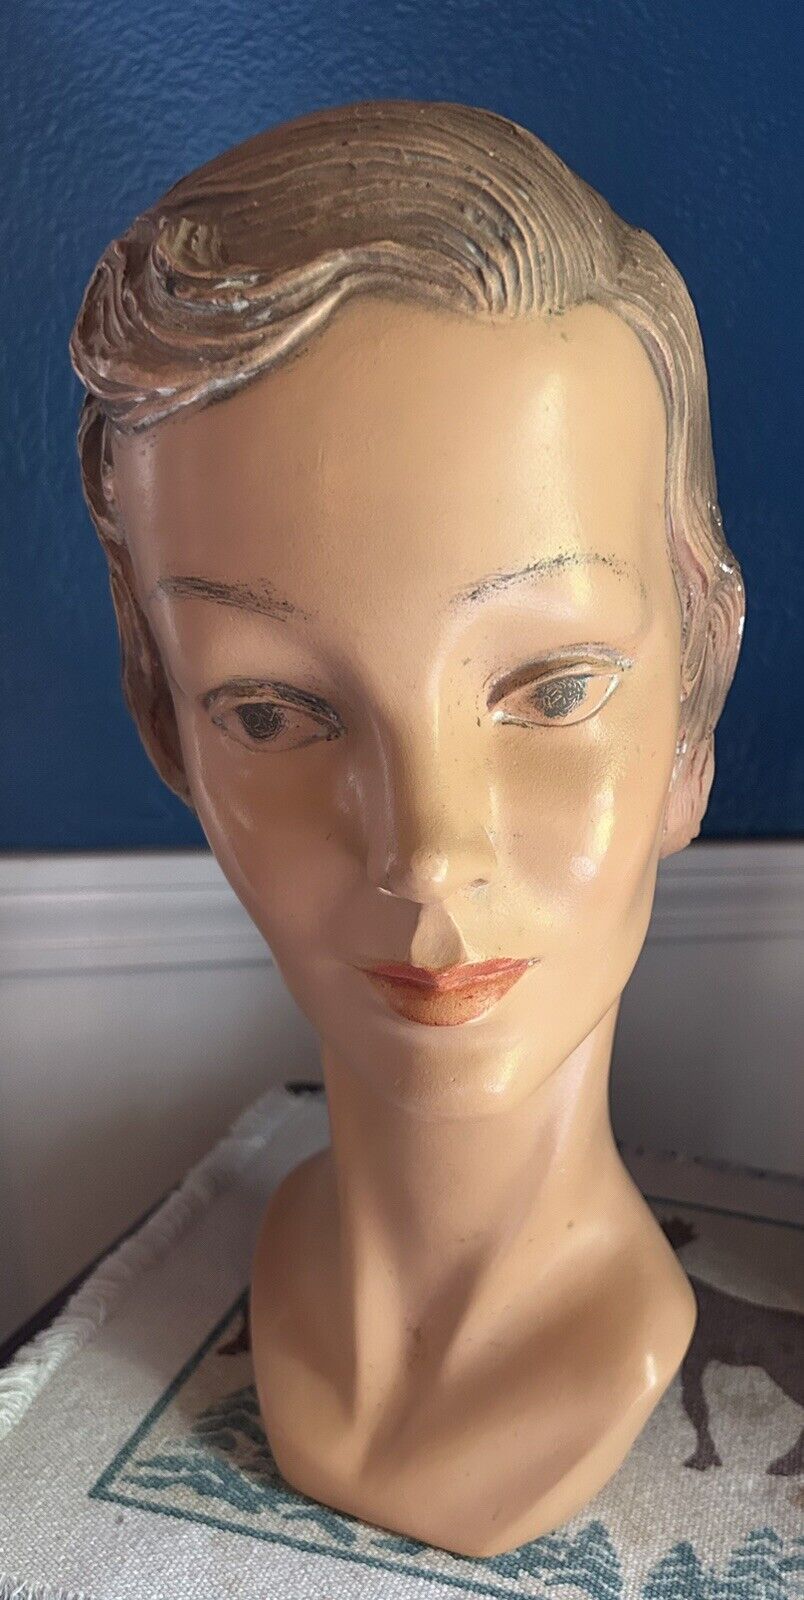 Vintage Plaster Mannequin Head